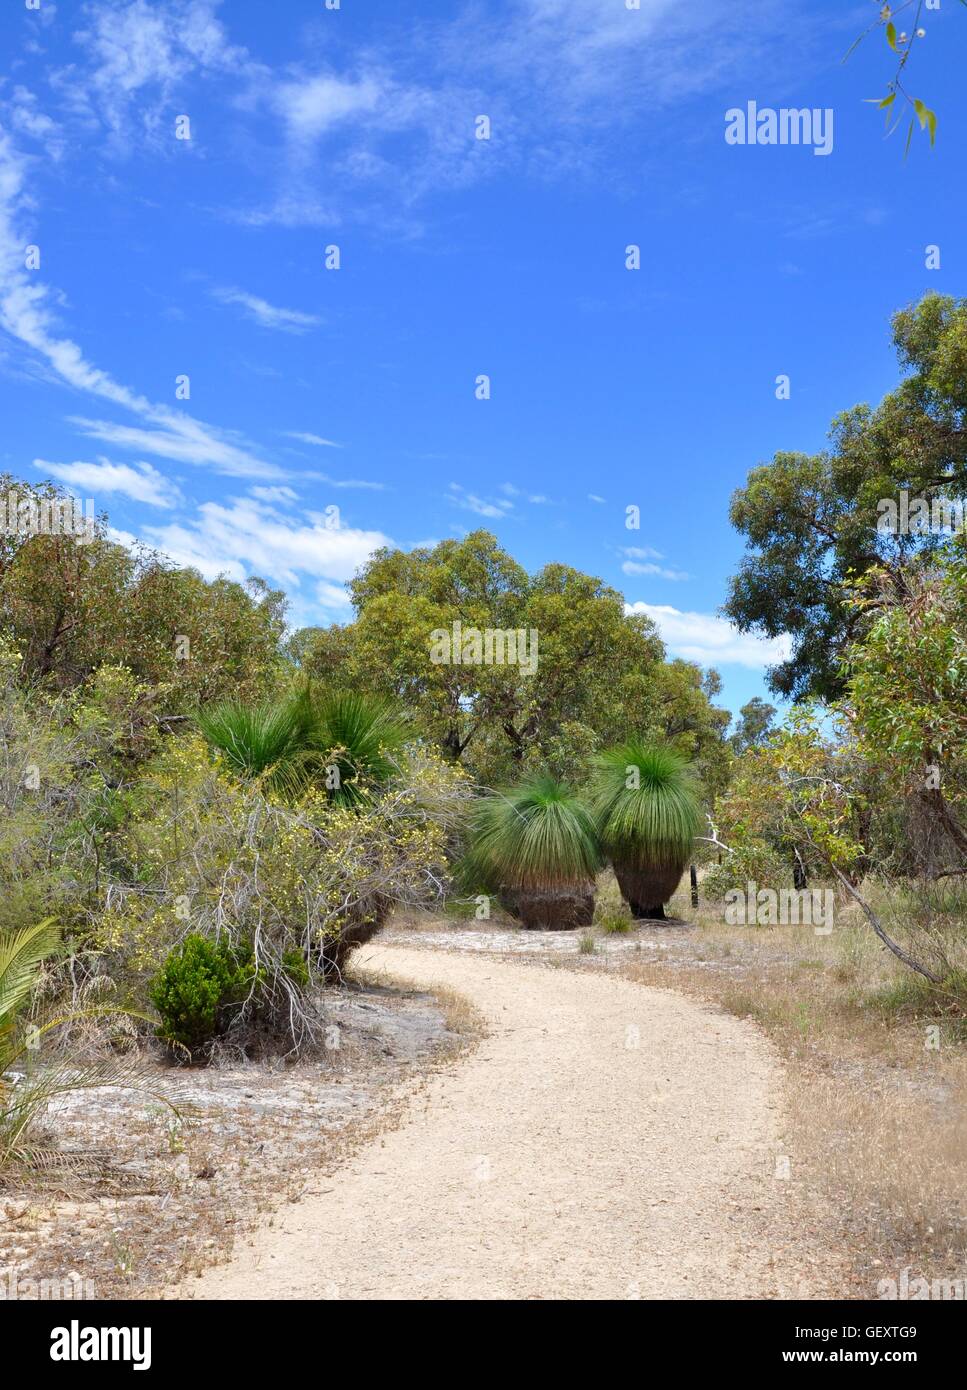 Winding sandy pedestrian path through the lush, green bushland in the Bibra Lake reserve under a blue sky in Western Australia. Stock Photo